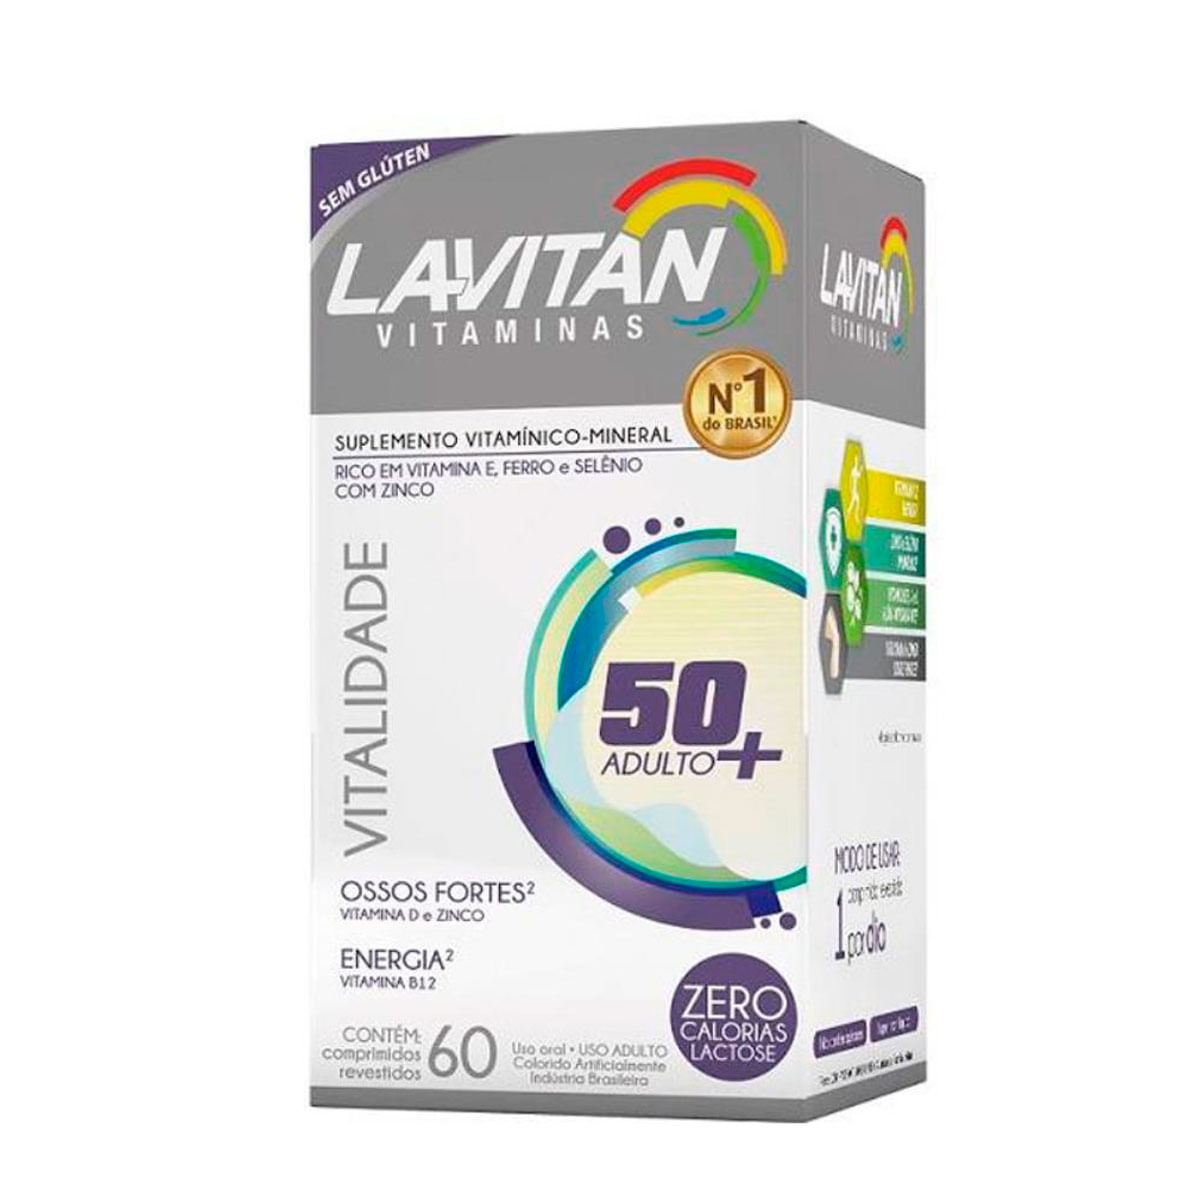 Lavitan Vitaminas Vitalidade Suplemento para Adulto 50+ com 60 Comprimidos Cimed